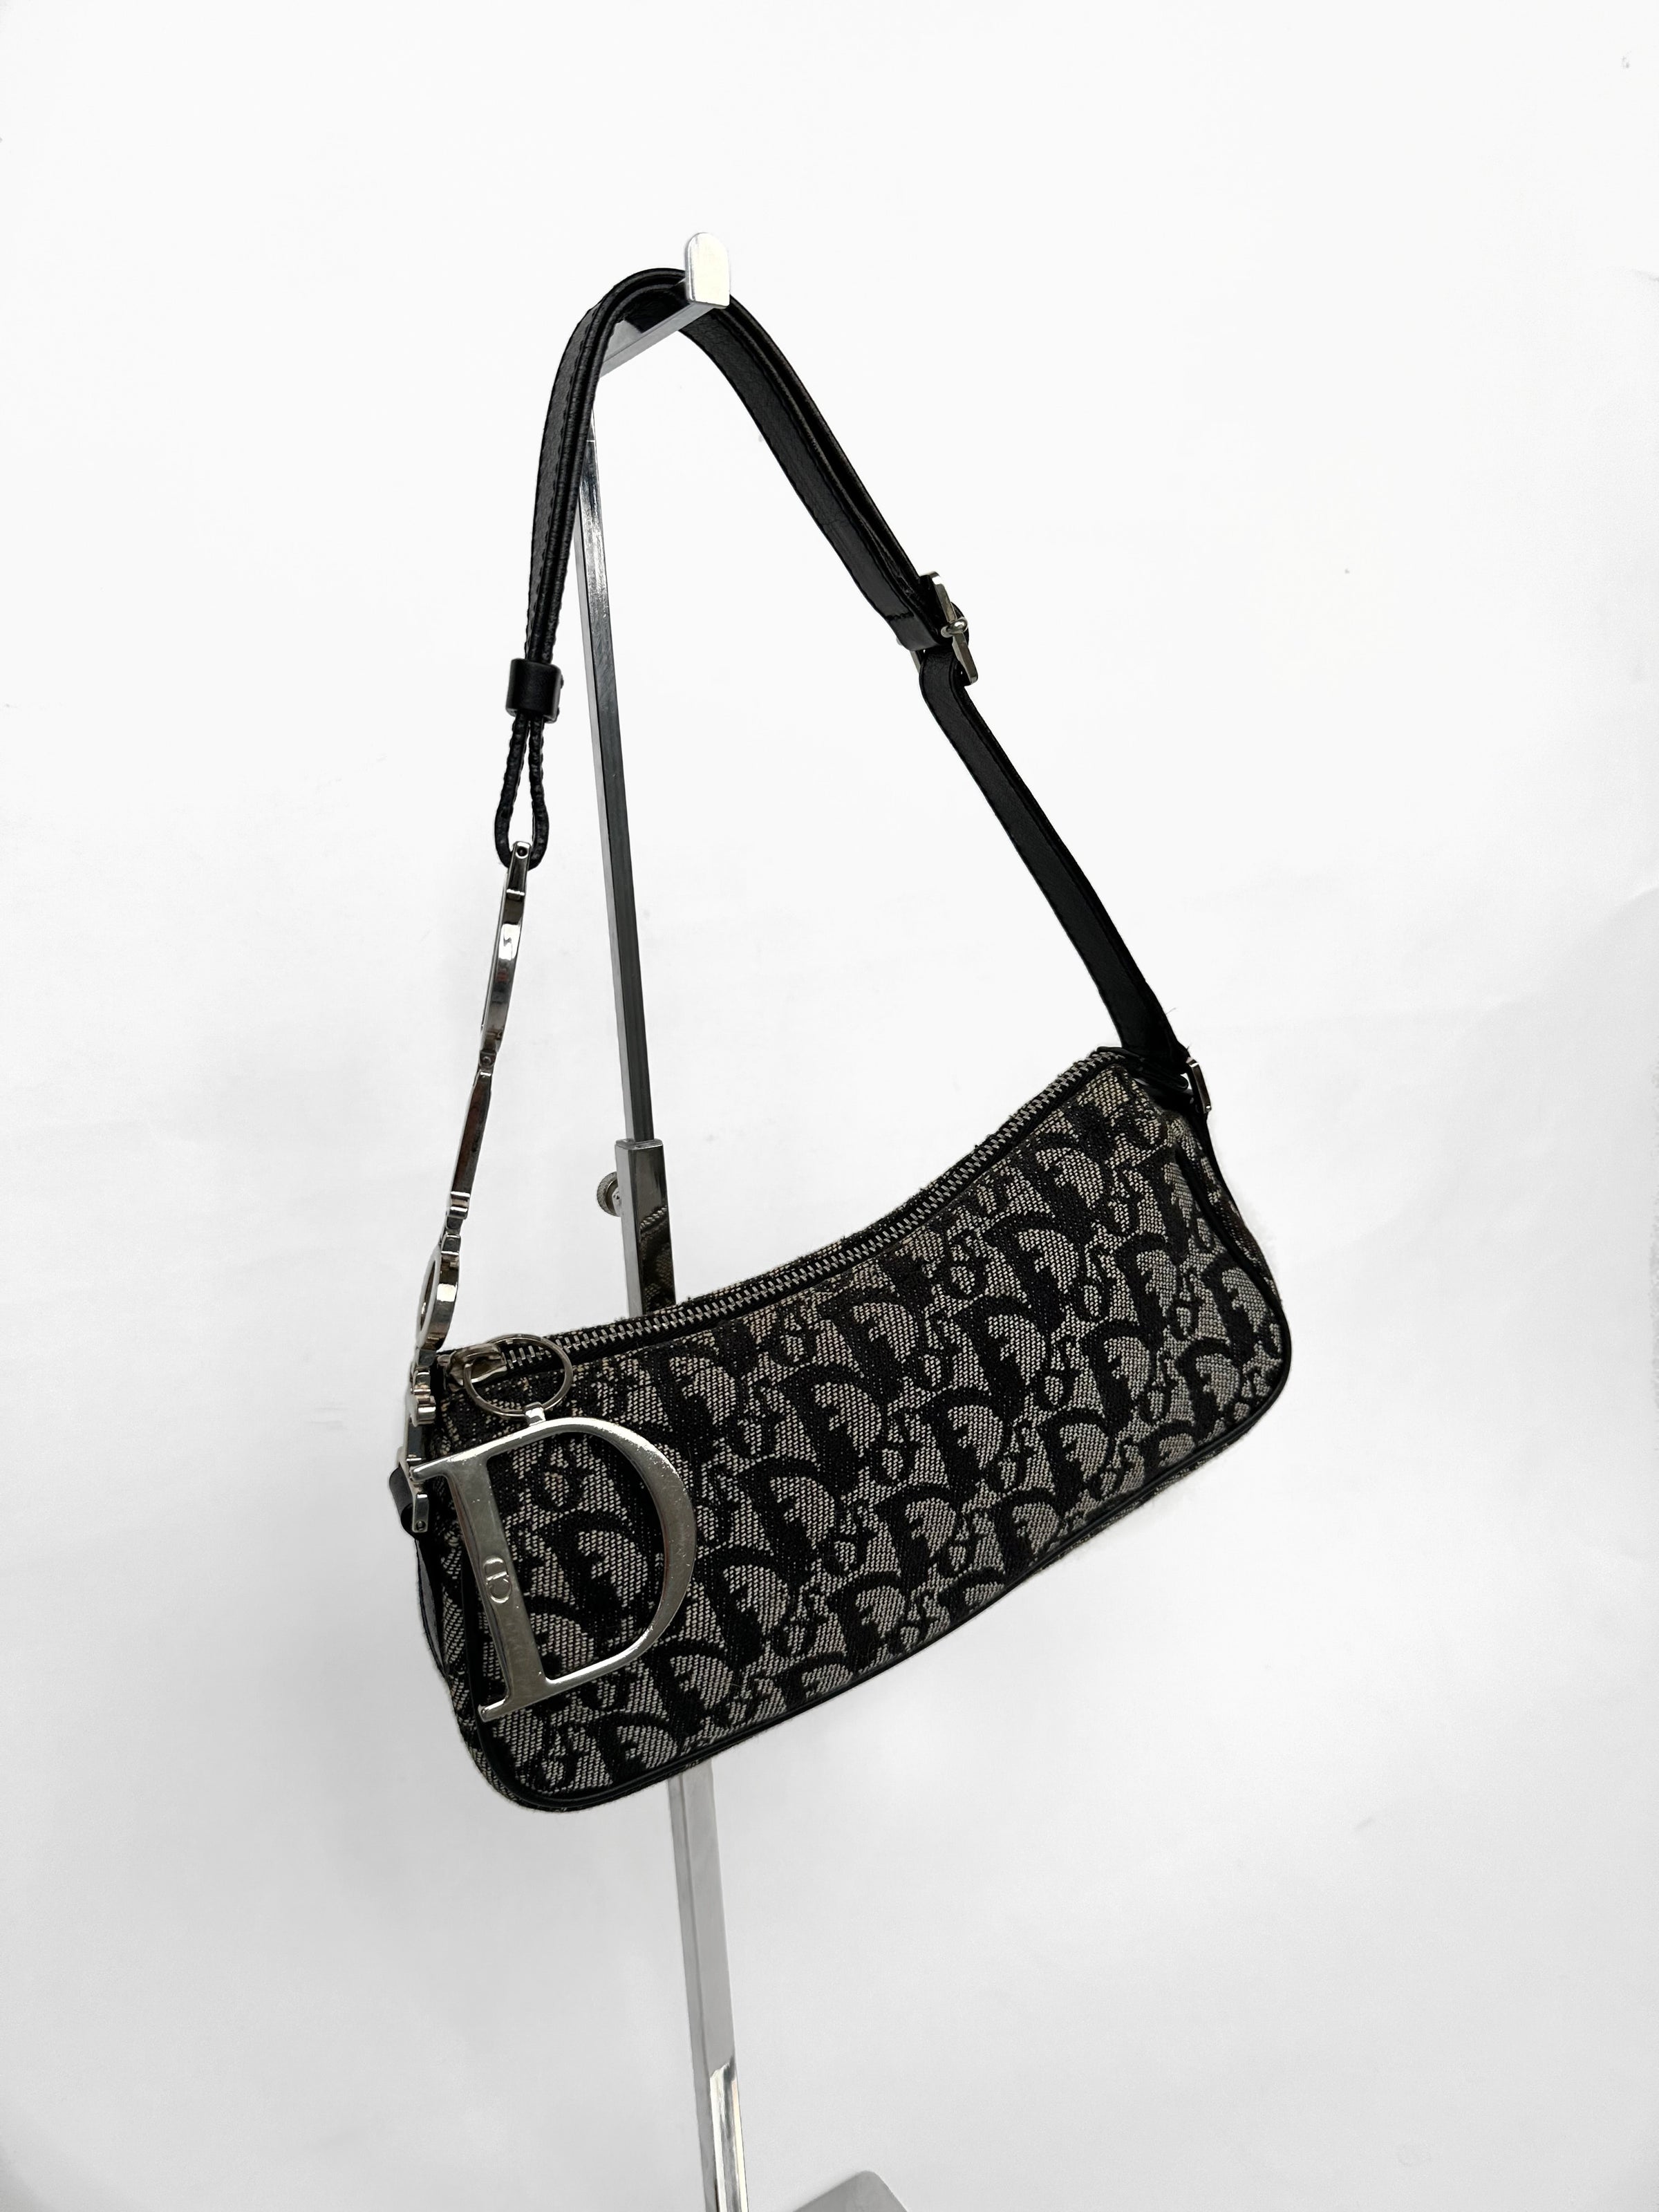 Dior Black Leather D Charms Pochette